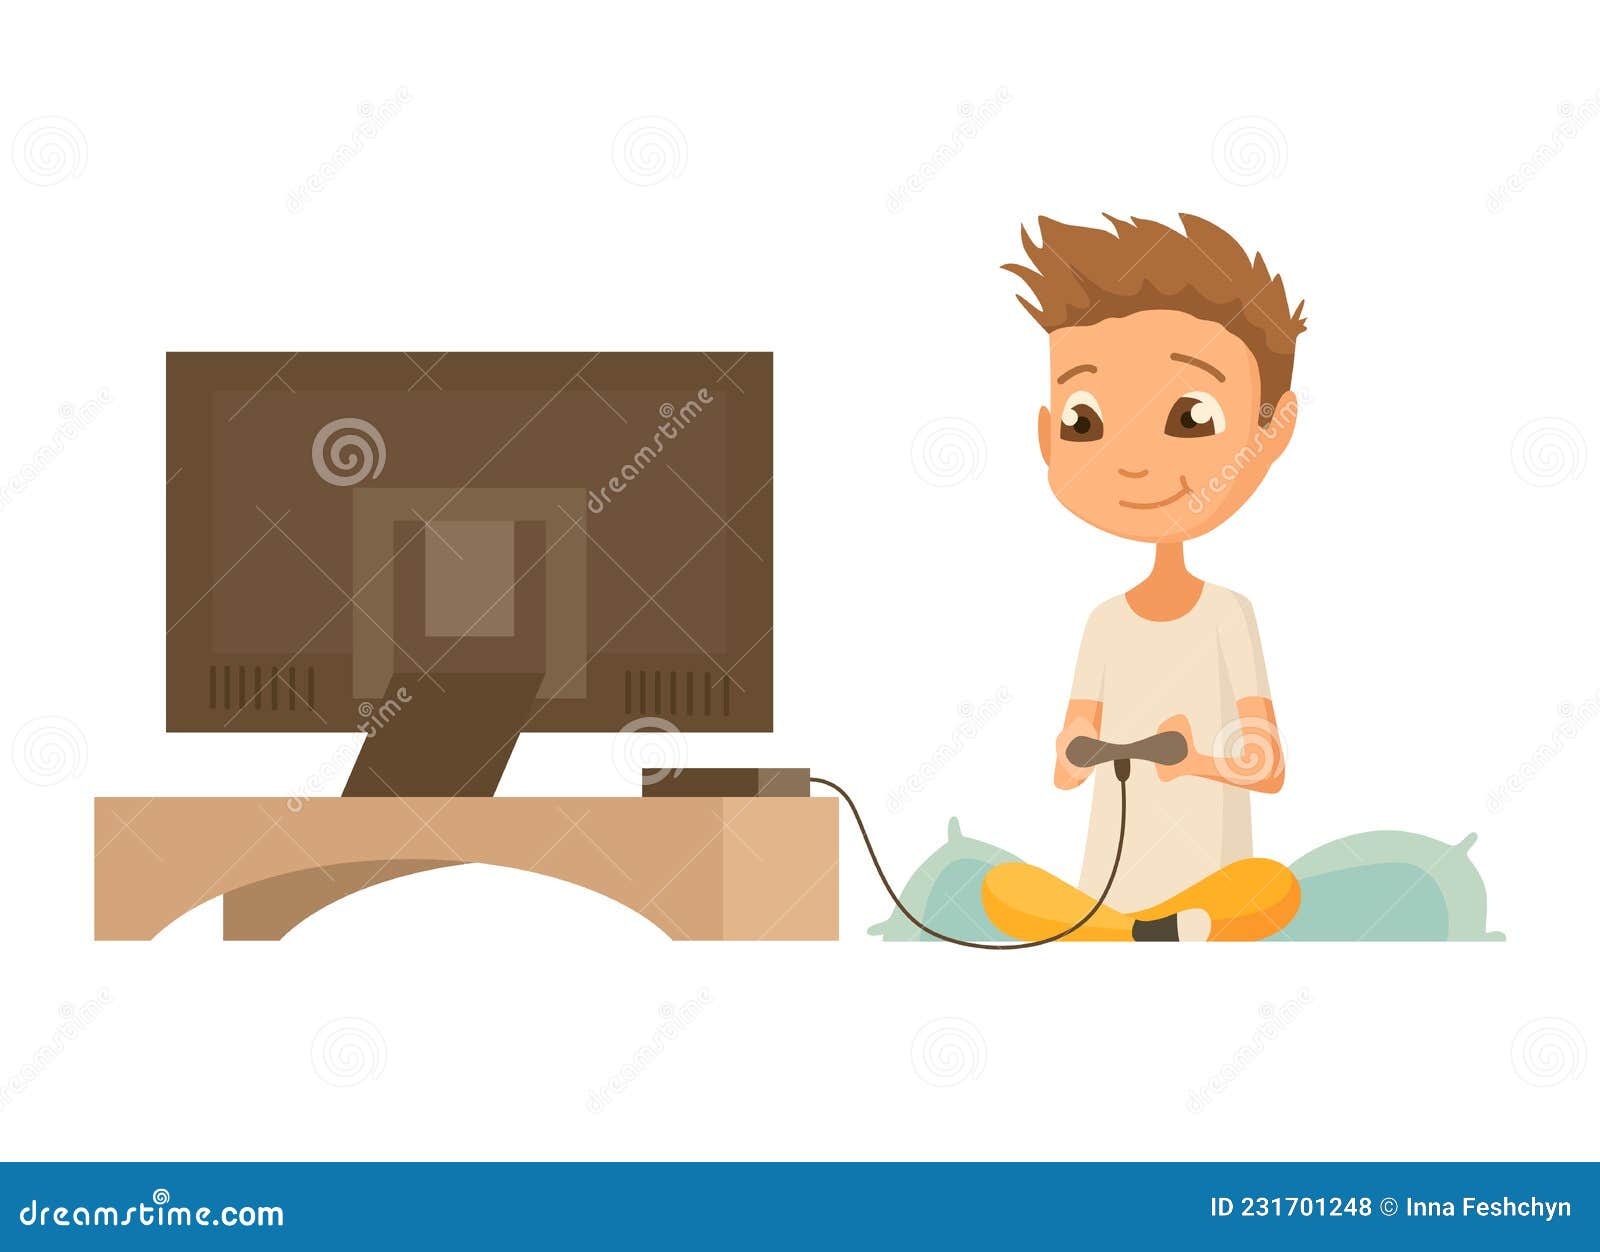 Personagem jogando videogame online